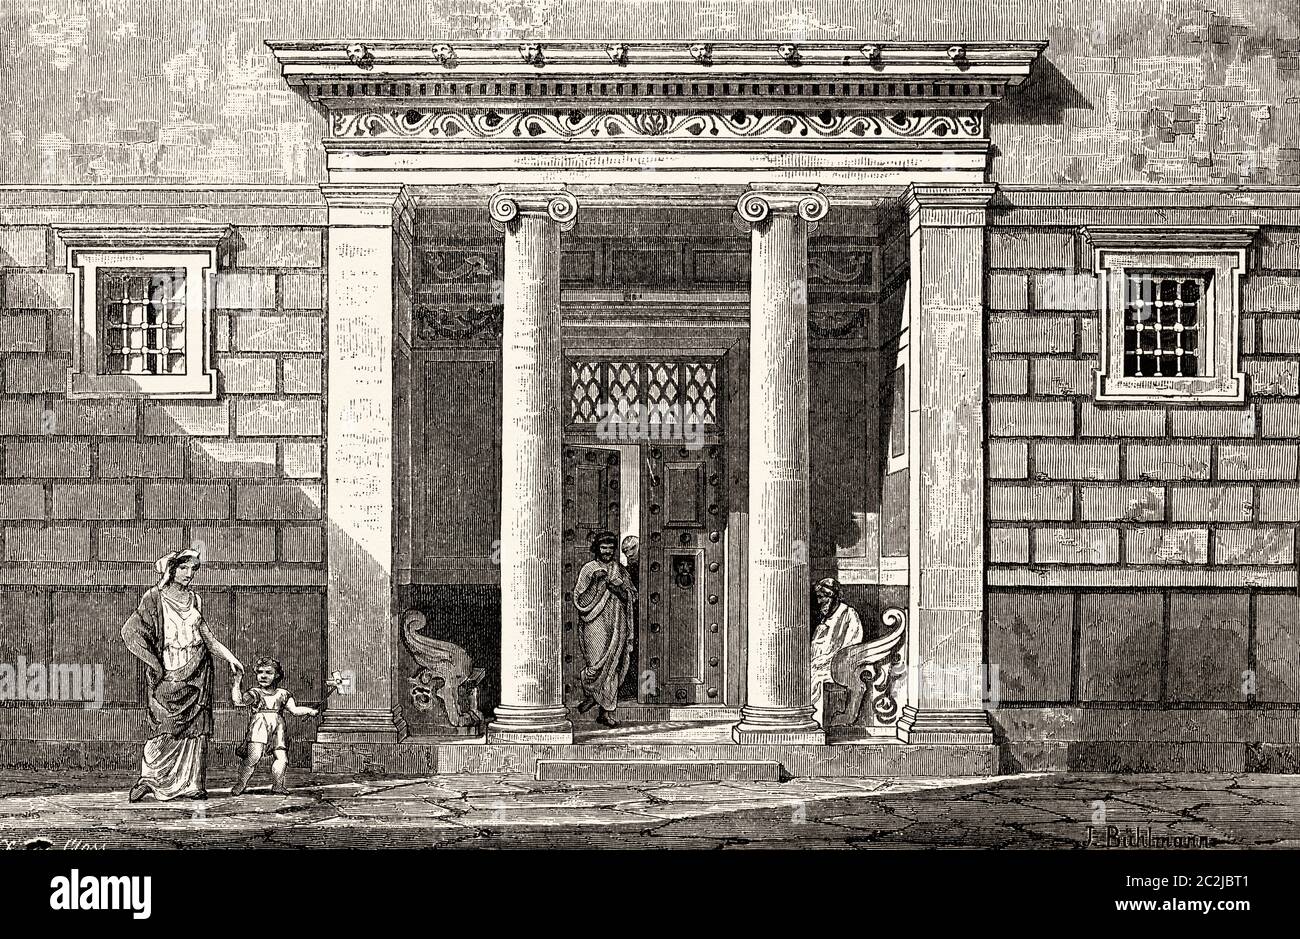 Entrance door house in the city of Athens. Ancient Greece. Old 19th century engraved illustration, El Mundo Ilustrado 1880 Stock Photo